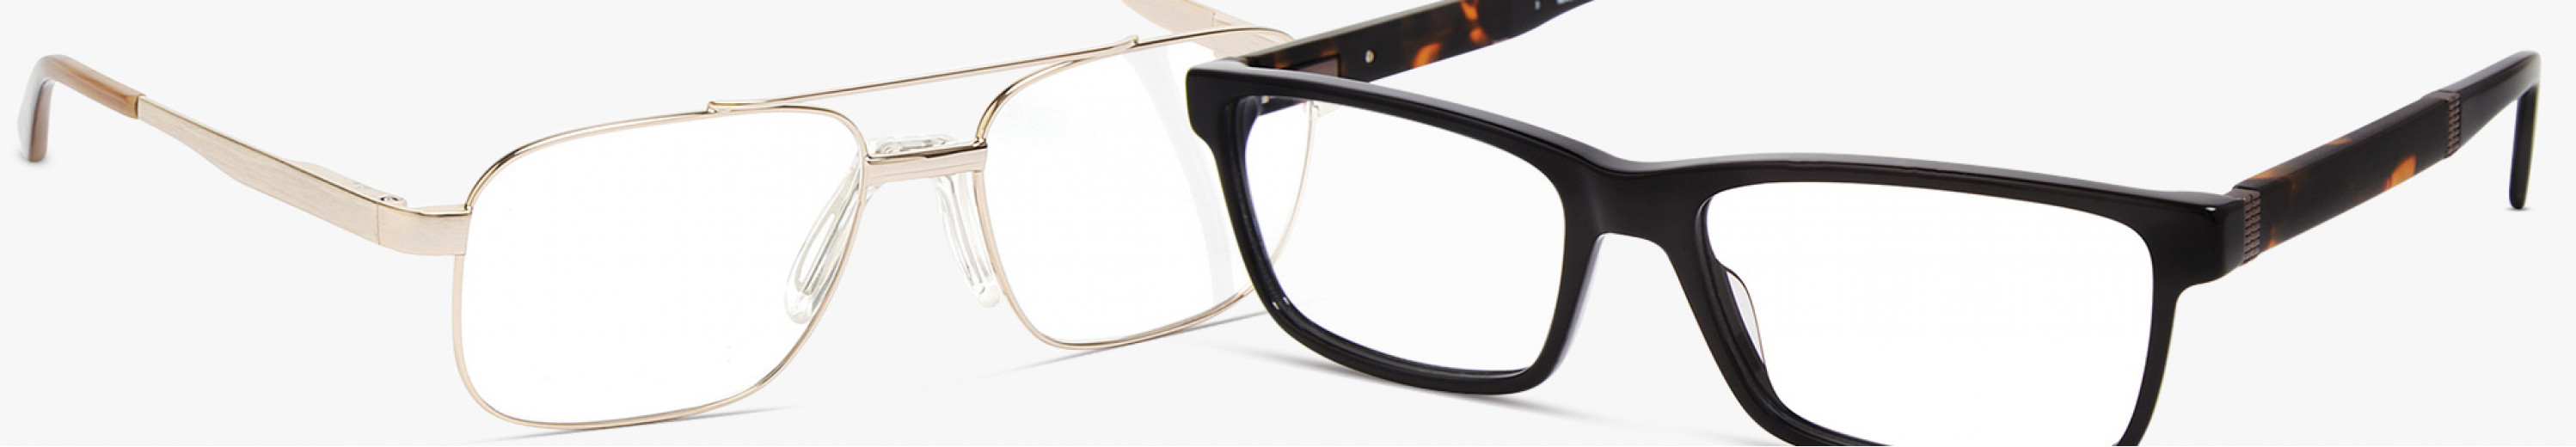 J. Landon Eyeglasses & Frames